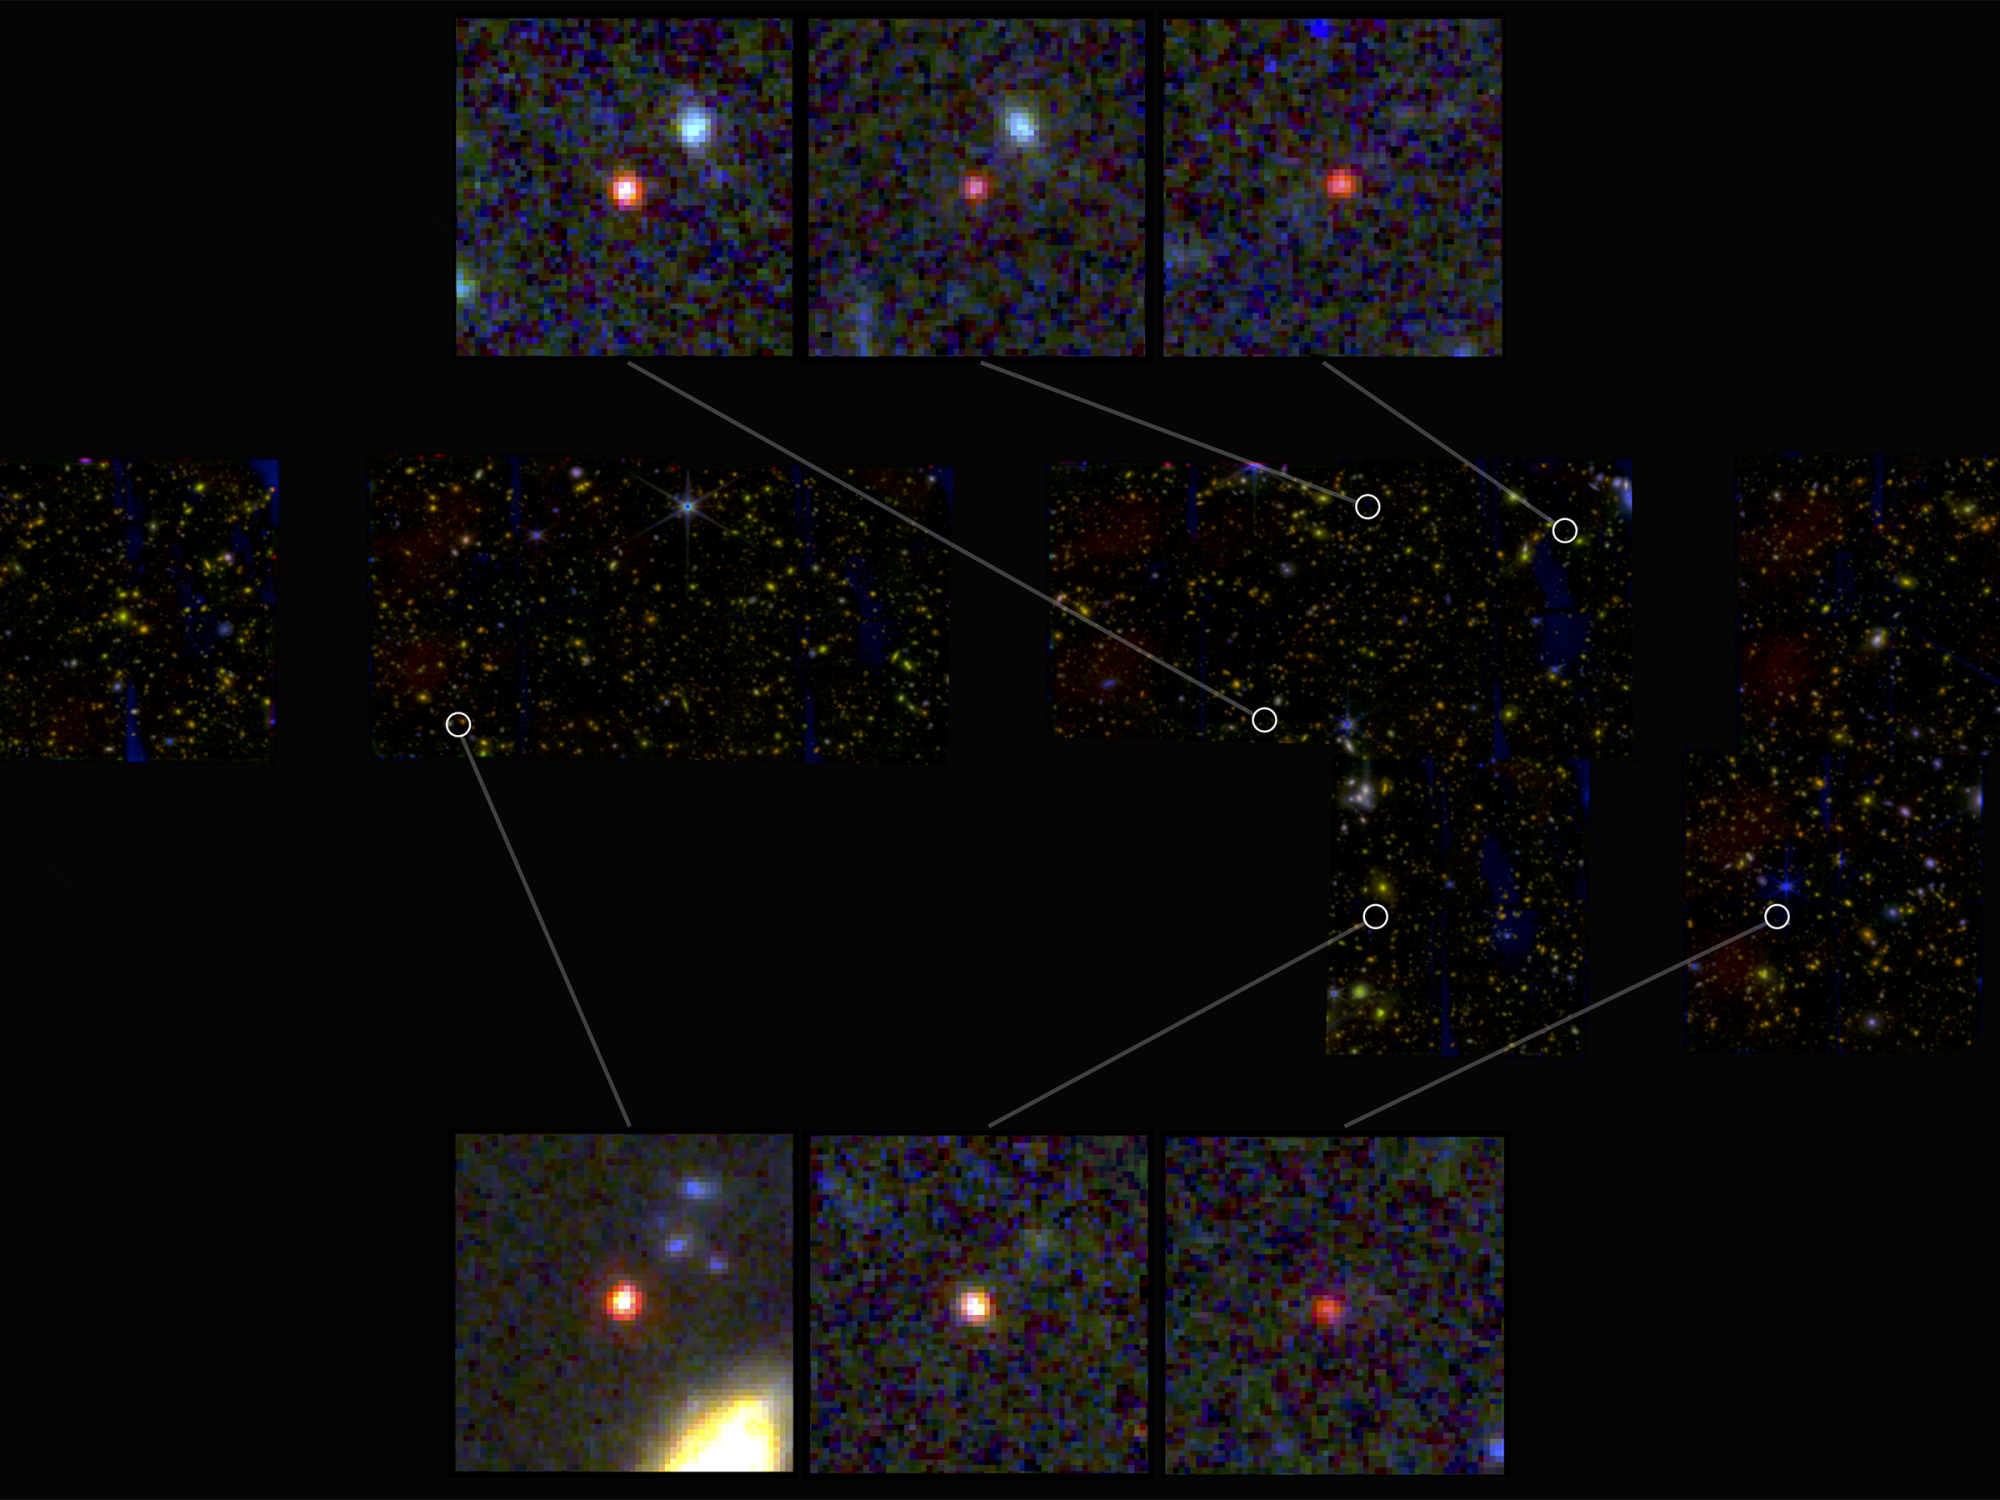 mages of six candidate massive galaxies, seen 500-700 million years after the Big Bang. Image Credit: NASA, ESA, CSA, I. Labbe.